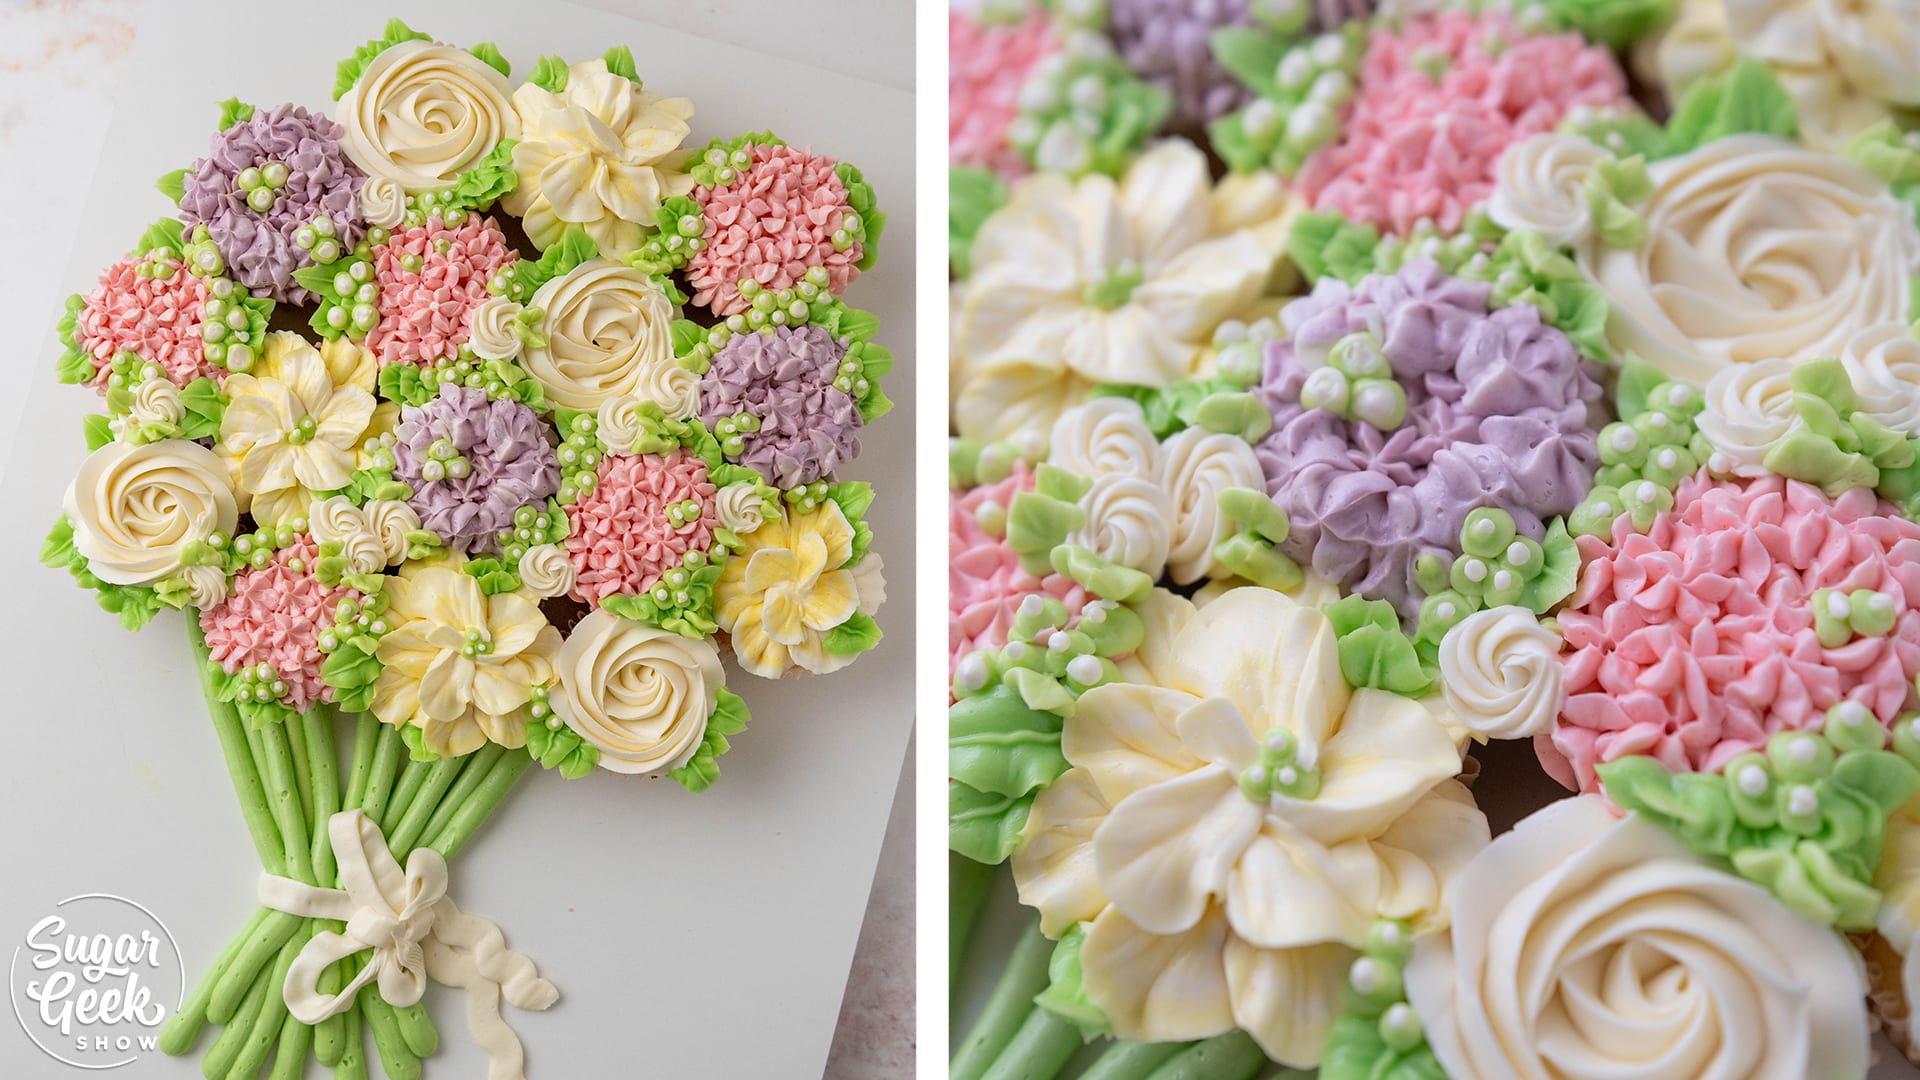 Flower Bouquet & Cake - Choiceflowersuae